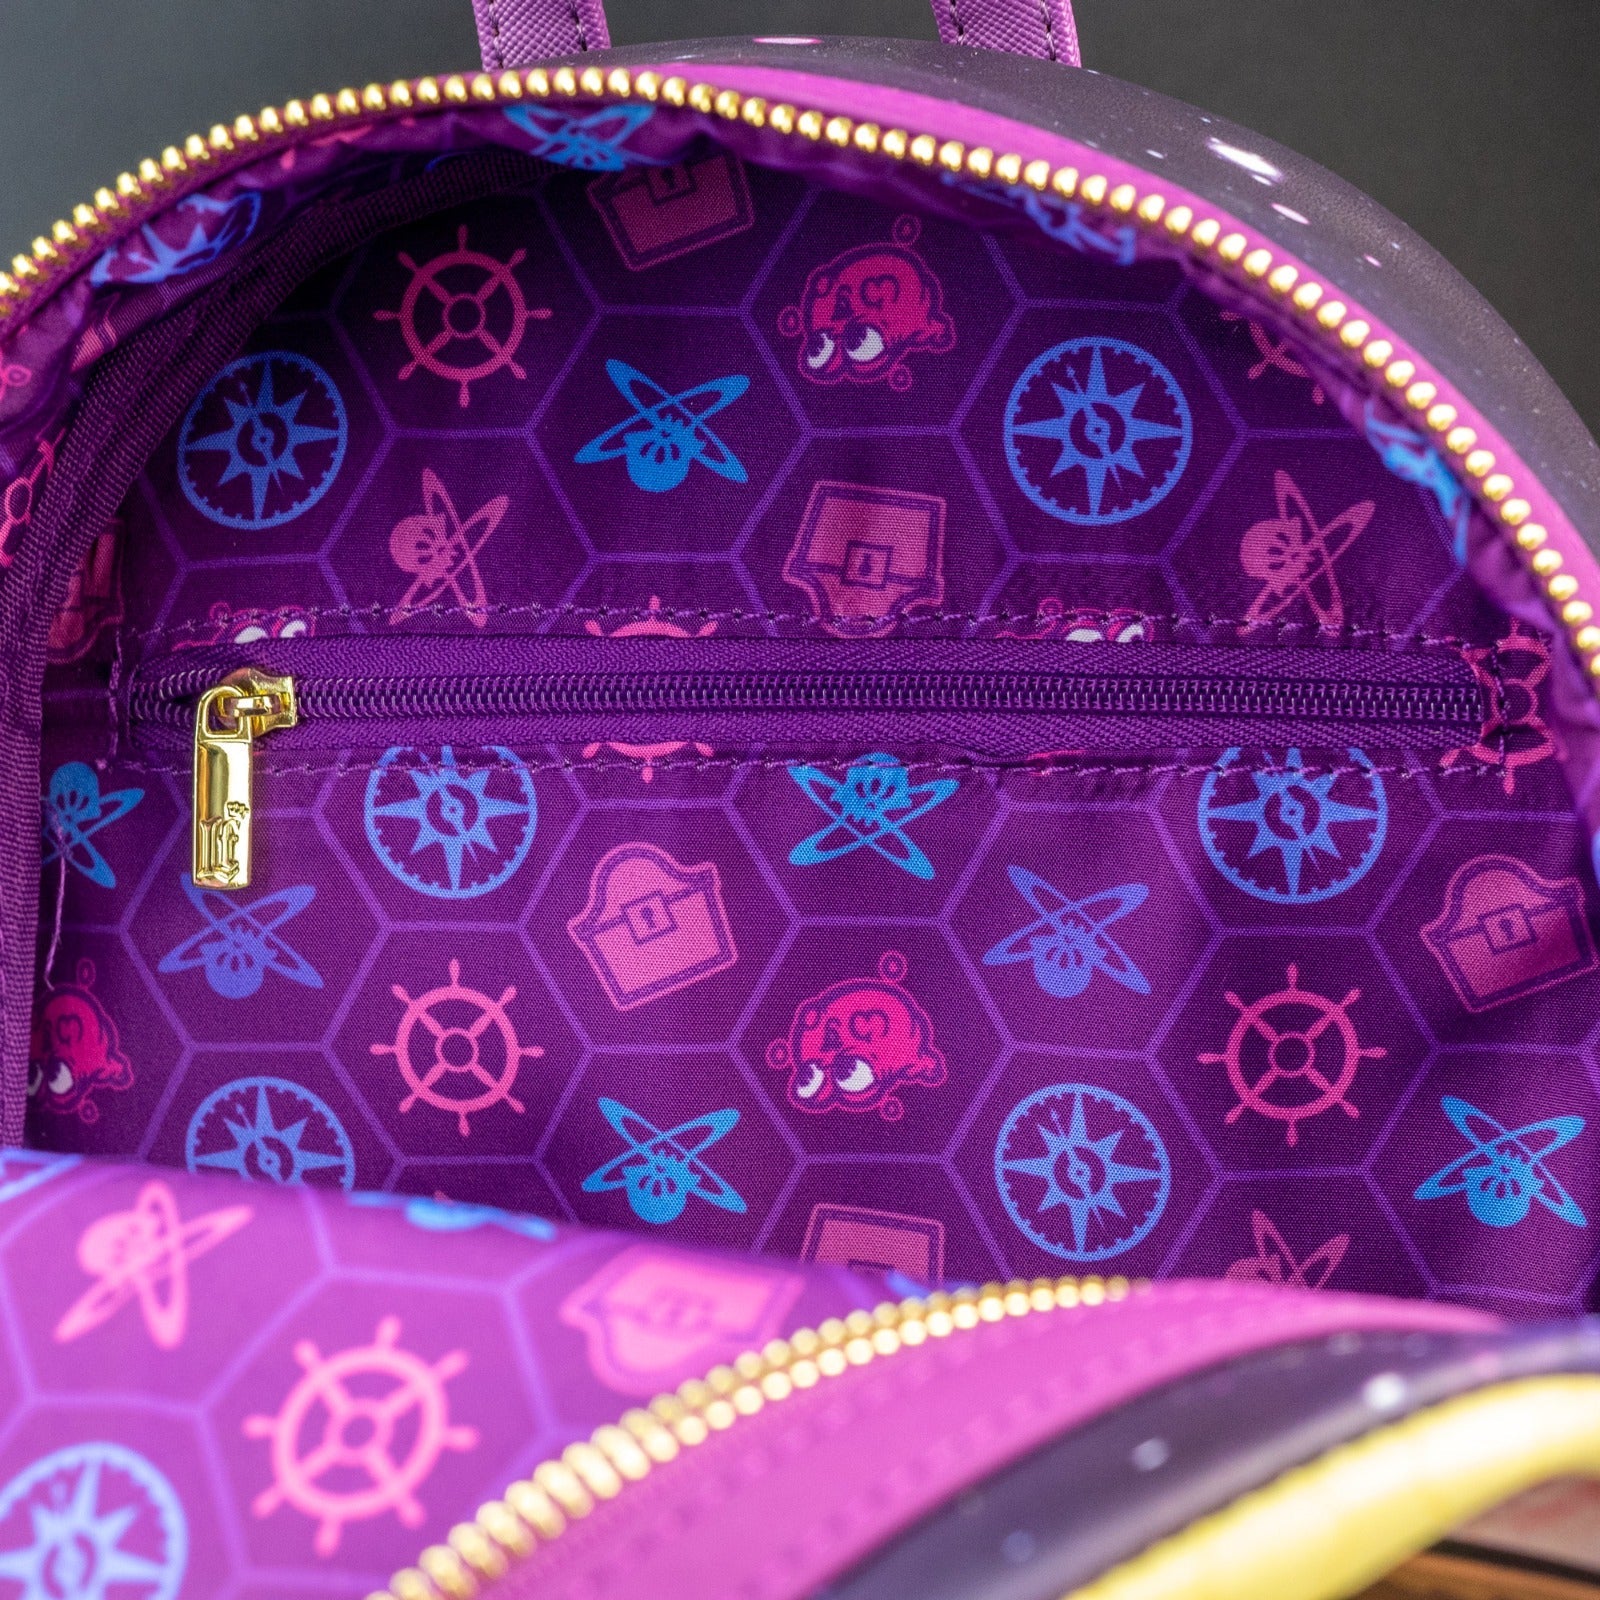 Loungefly x Disney Treasure Planet Mini Backpack - GeekCore